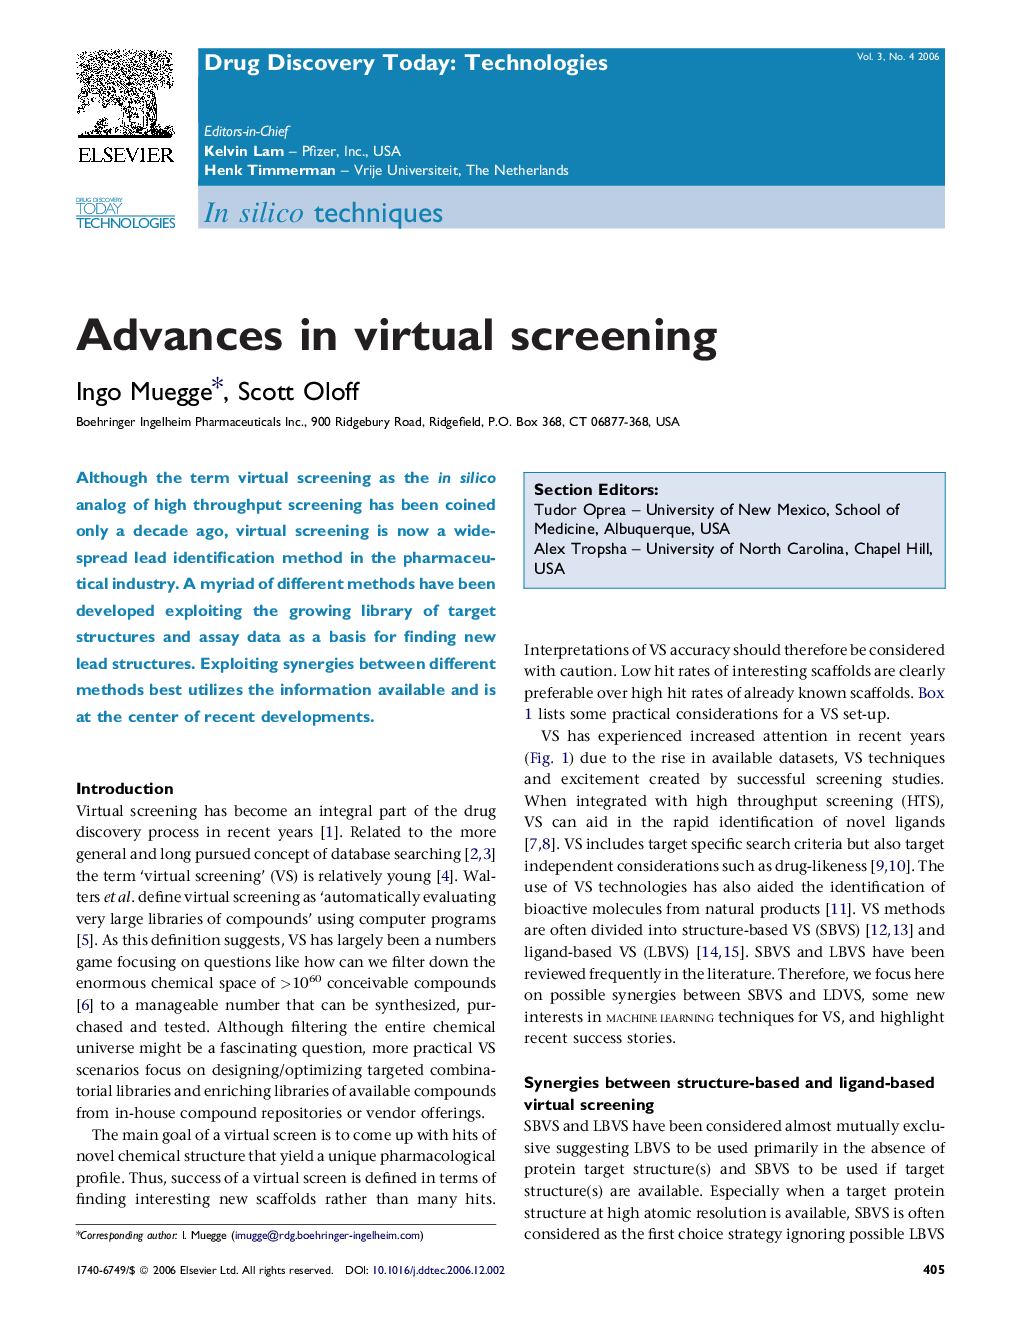 Advances in virtual screening